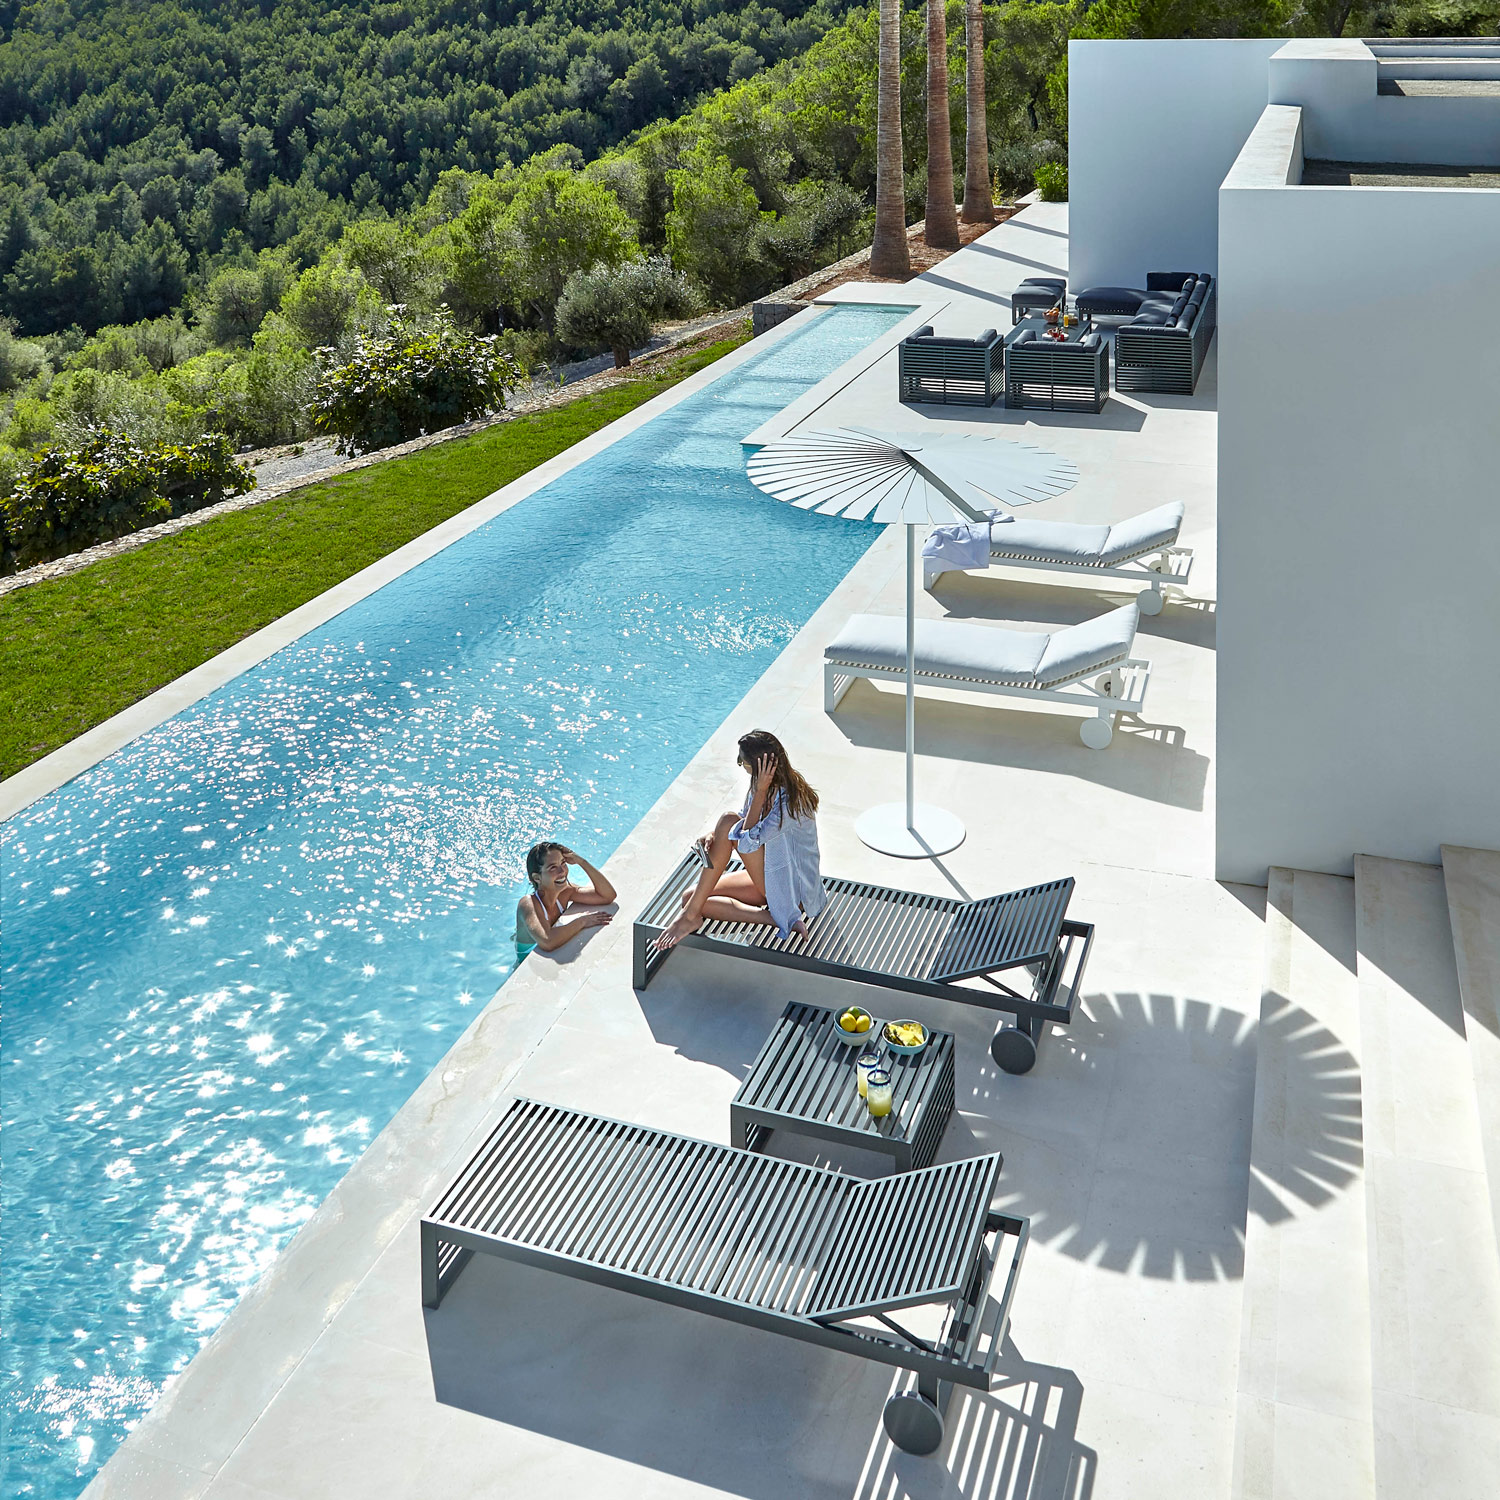 DNA luksuriøse møbler indrettet på terrassen ved poolen fra Gitz Design og Gandia Blasco